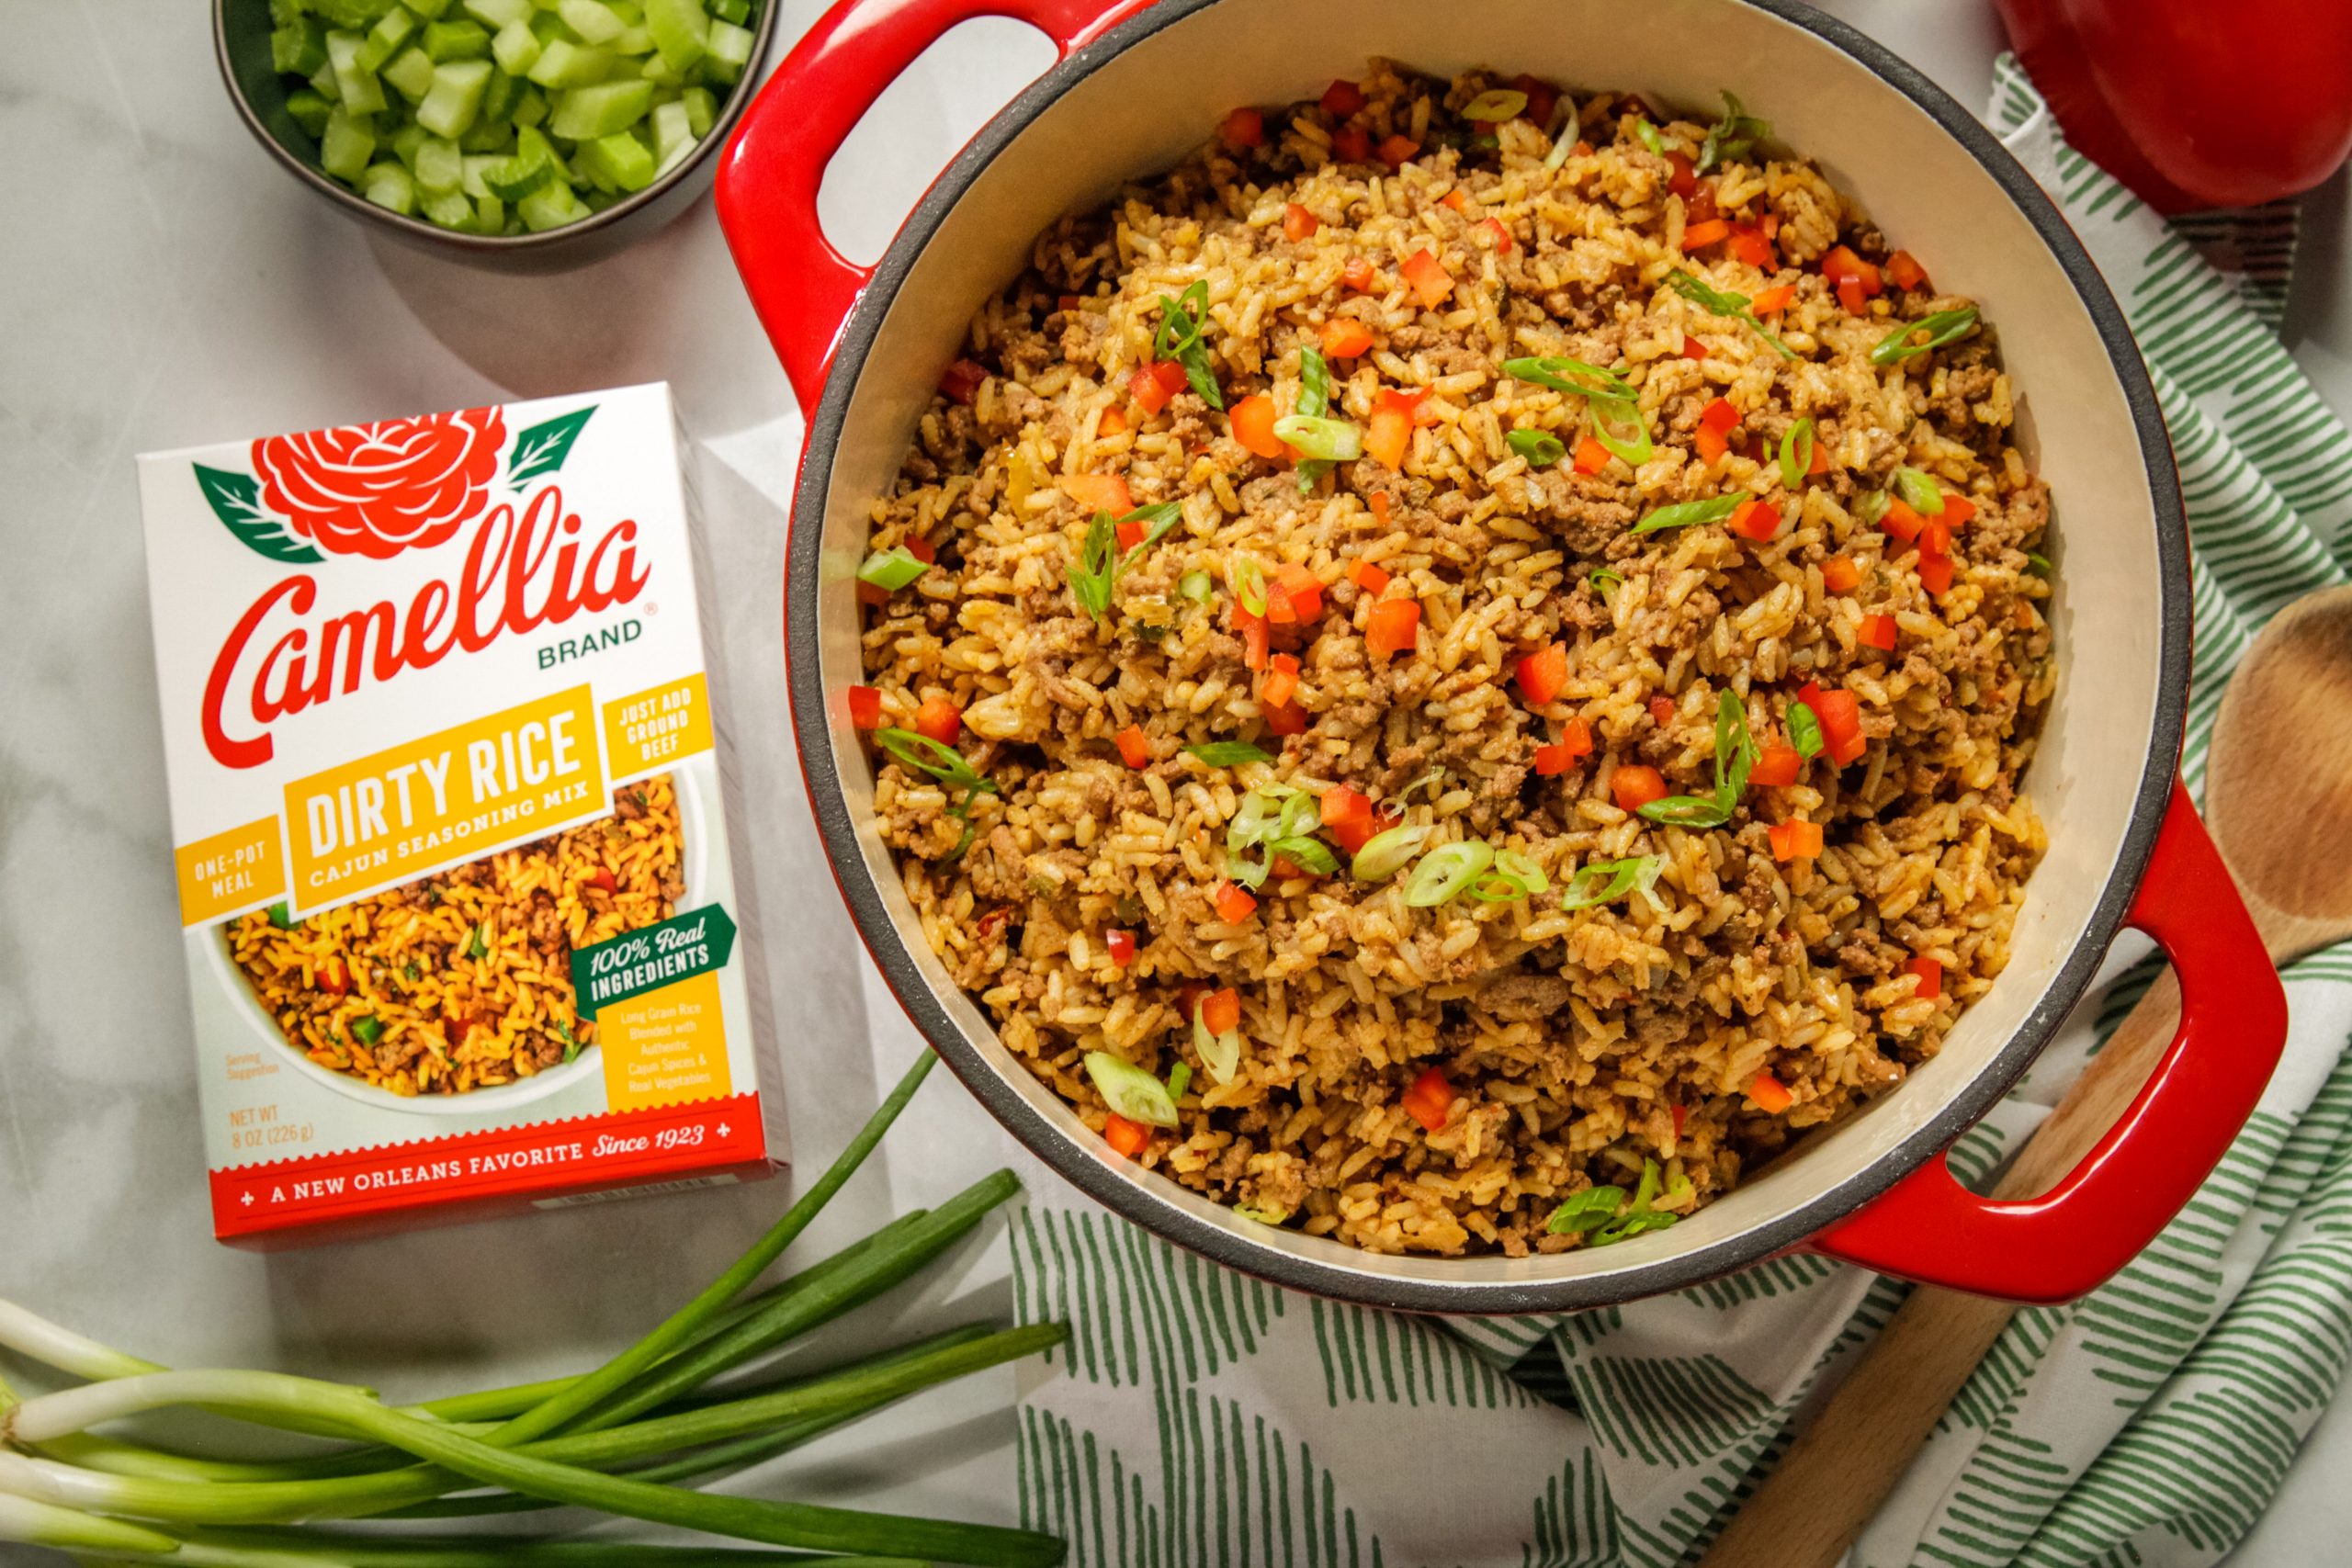 Gluten Free Cajun Dirty Rice :: Recipes :: Camellia Brand